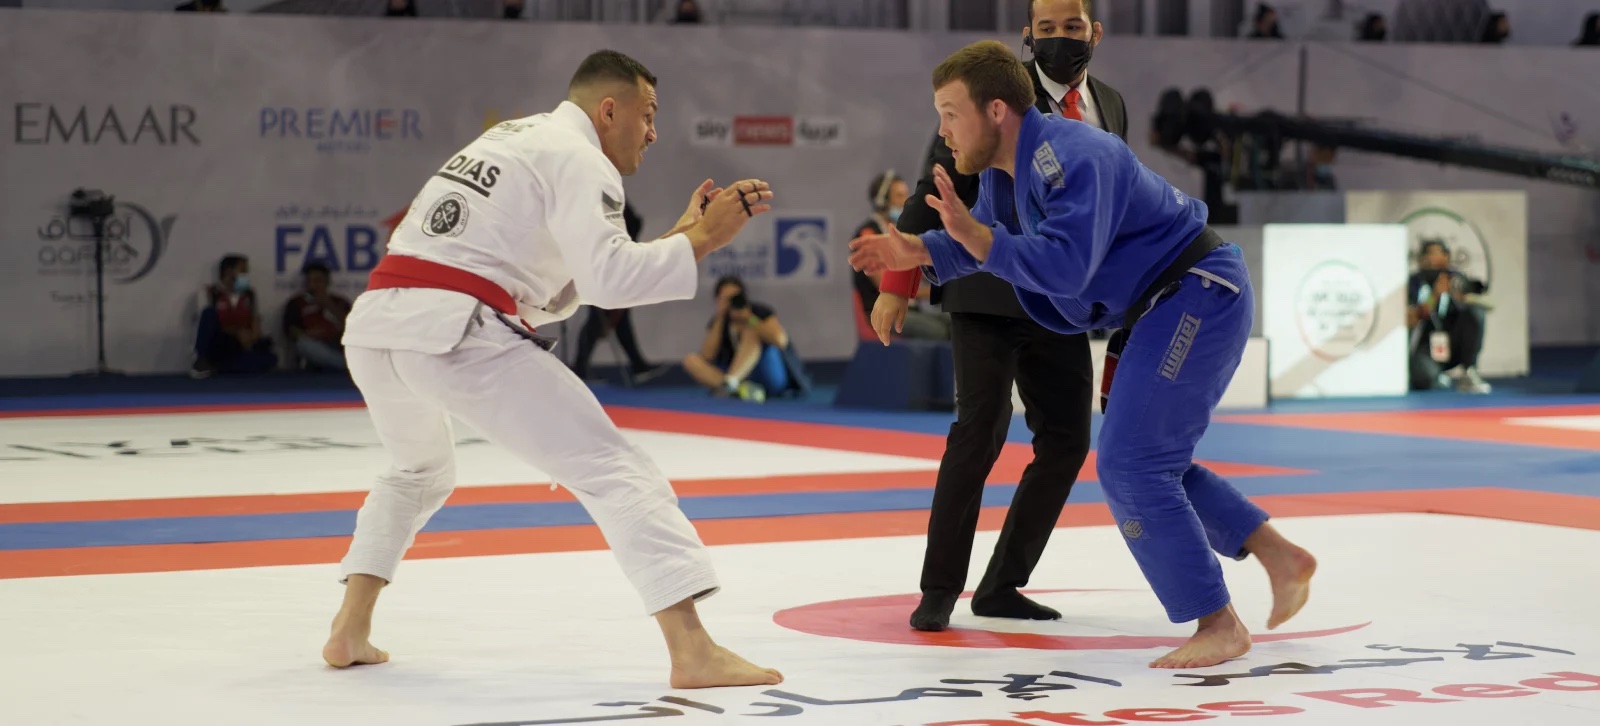 Top Jiu-Jitsu Tournaments Around the World for Competitors